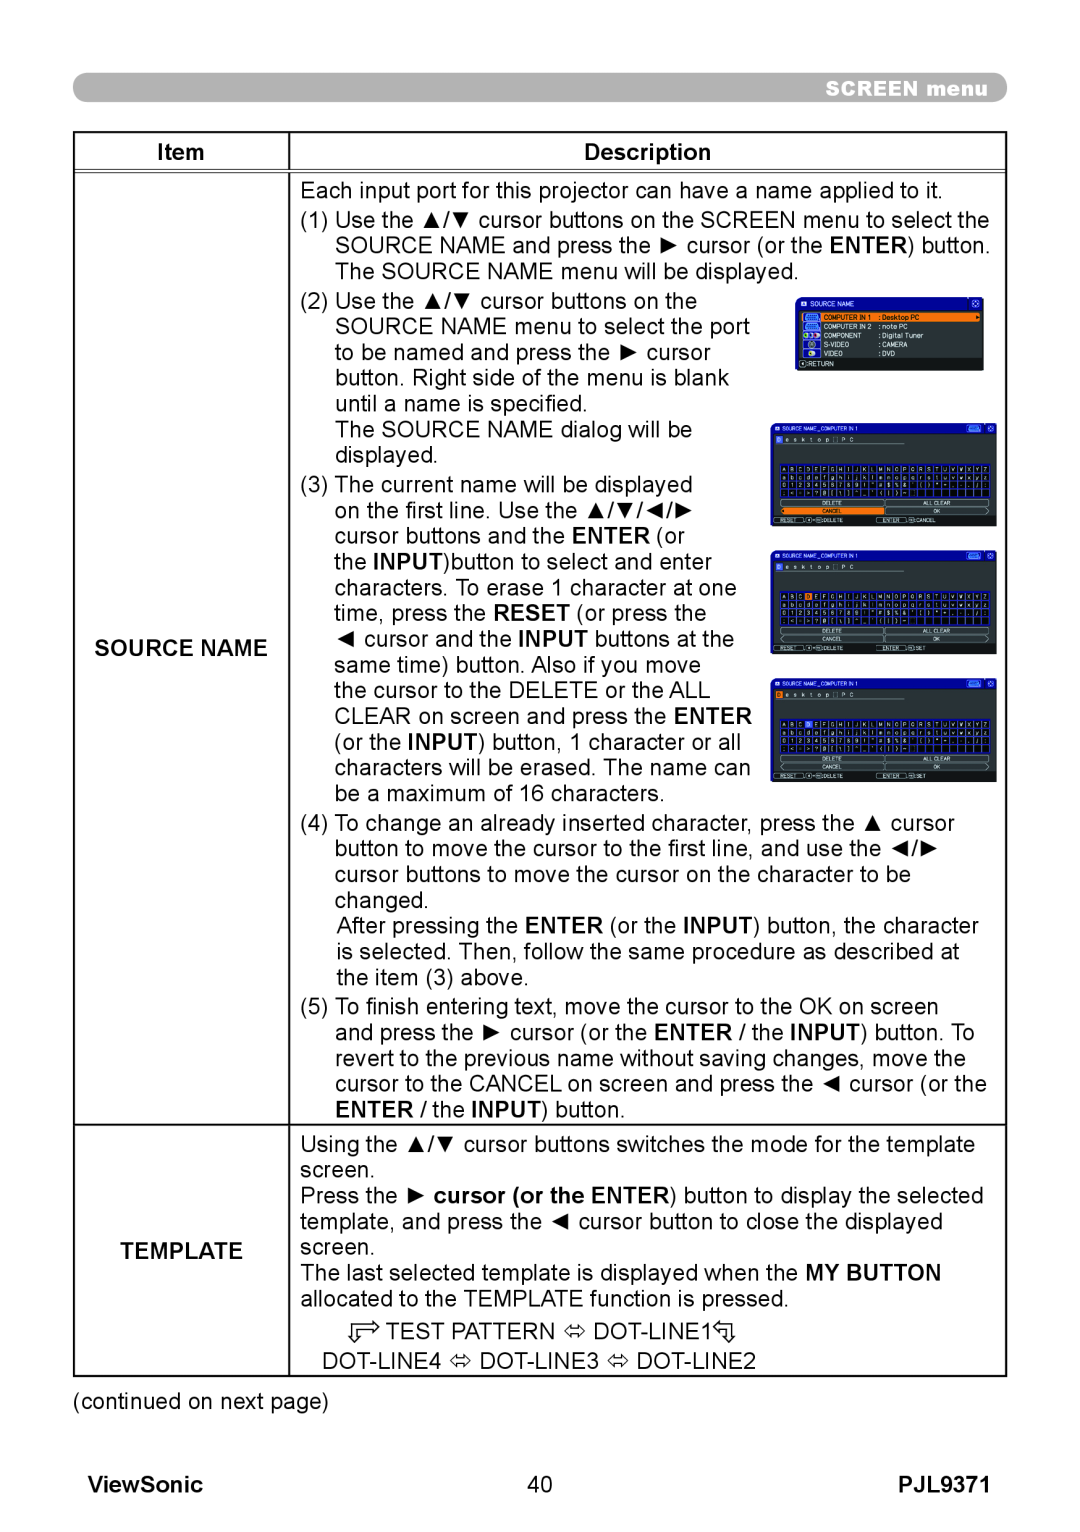 ViewSonic pjl9371 manual Item, Description, Source Name, Template, ViewSonic 